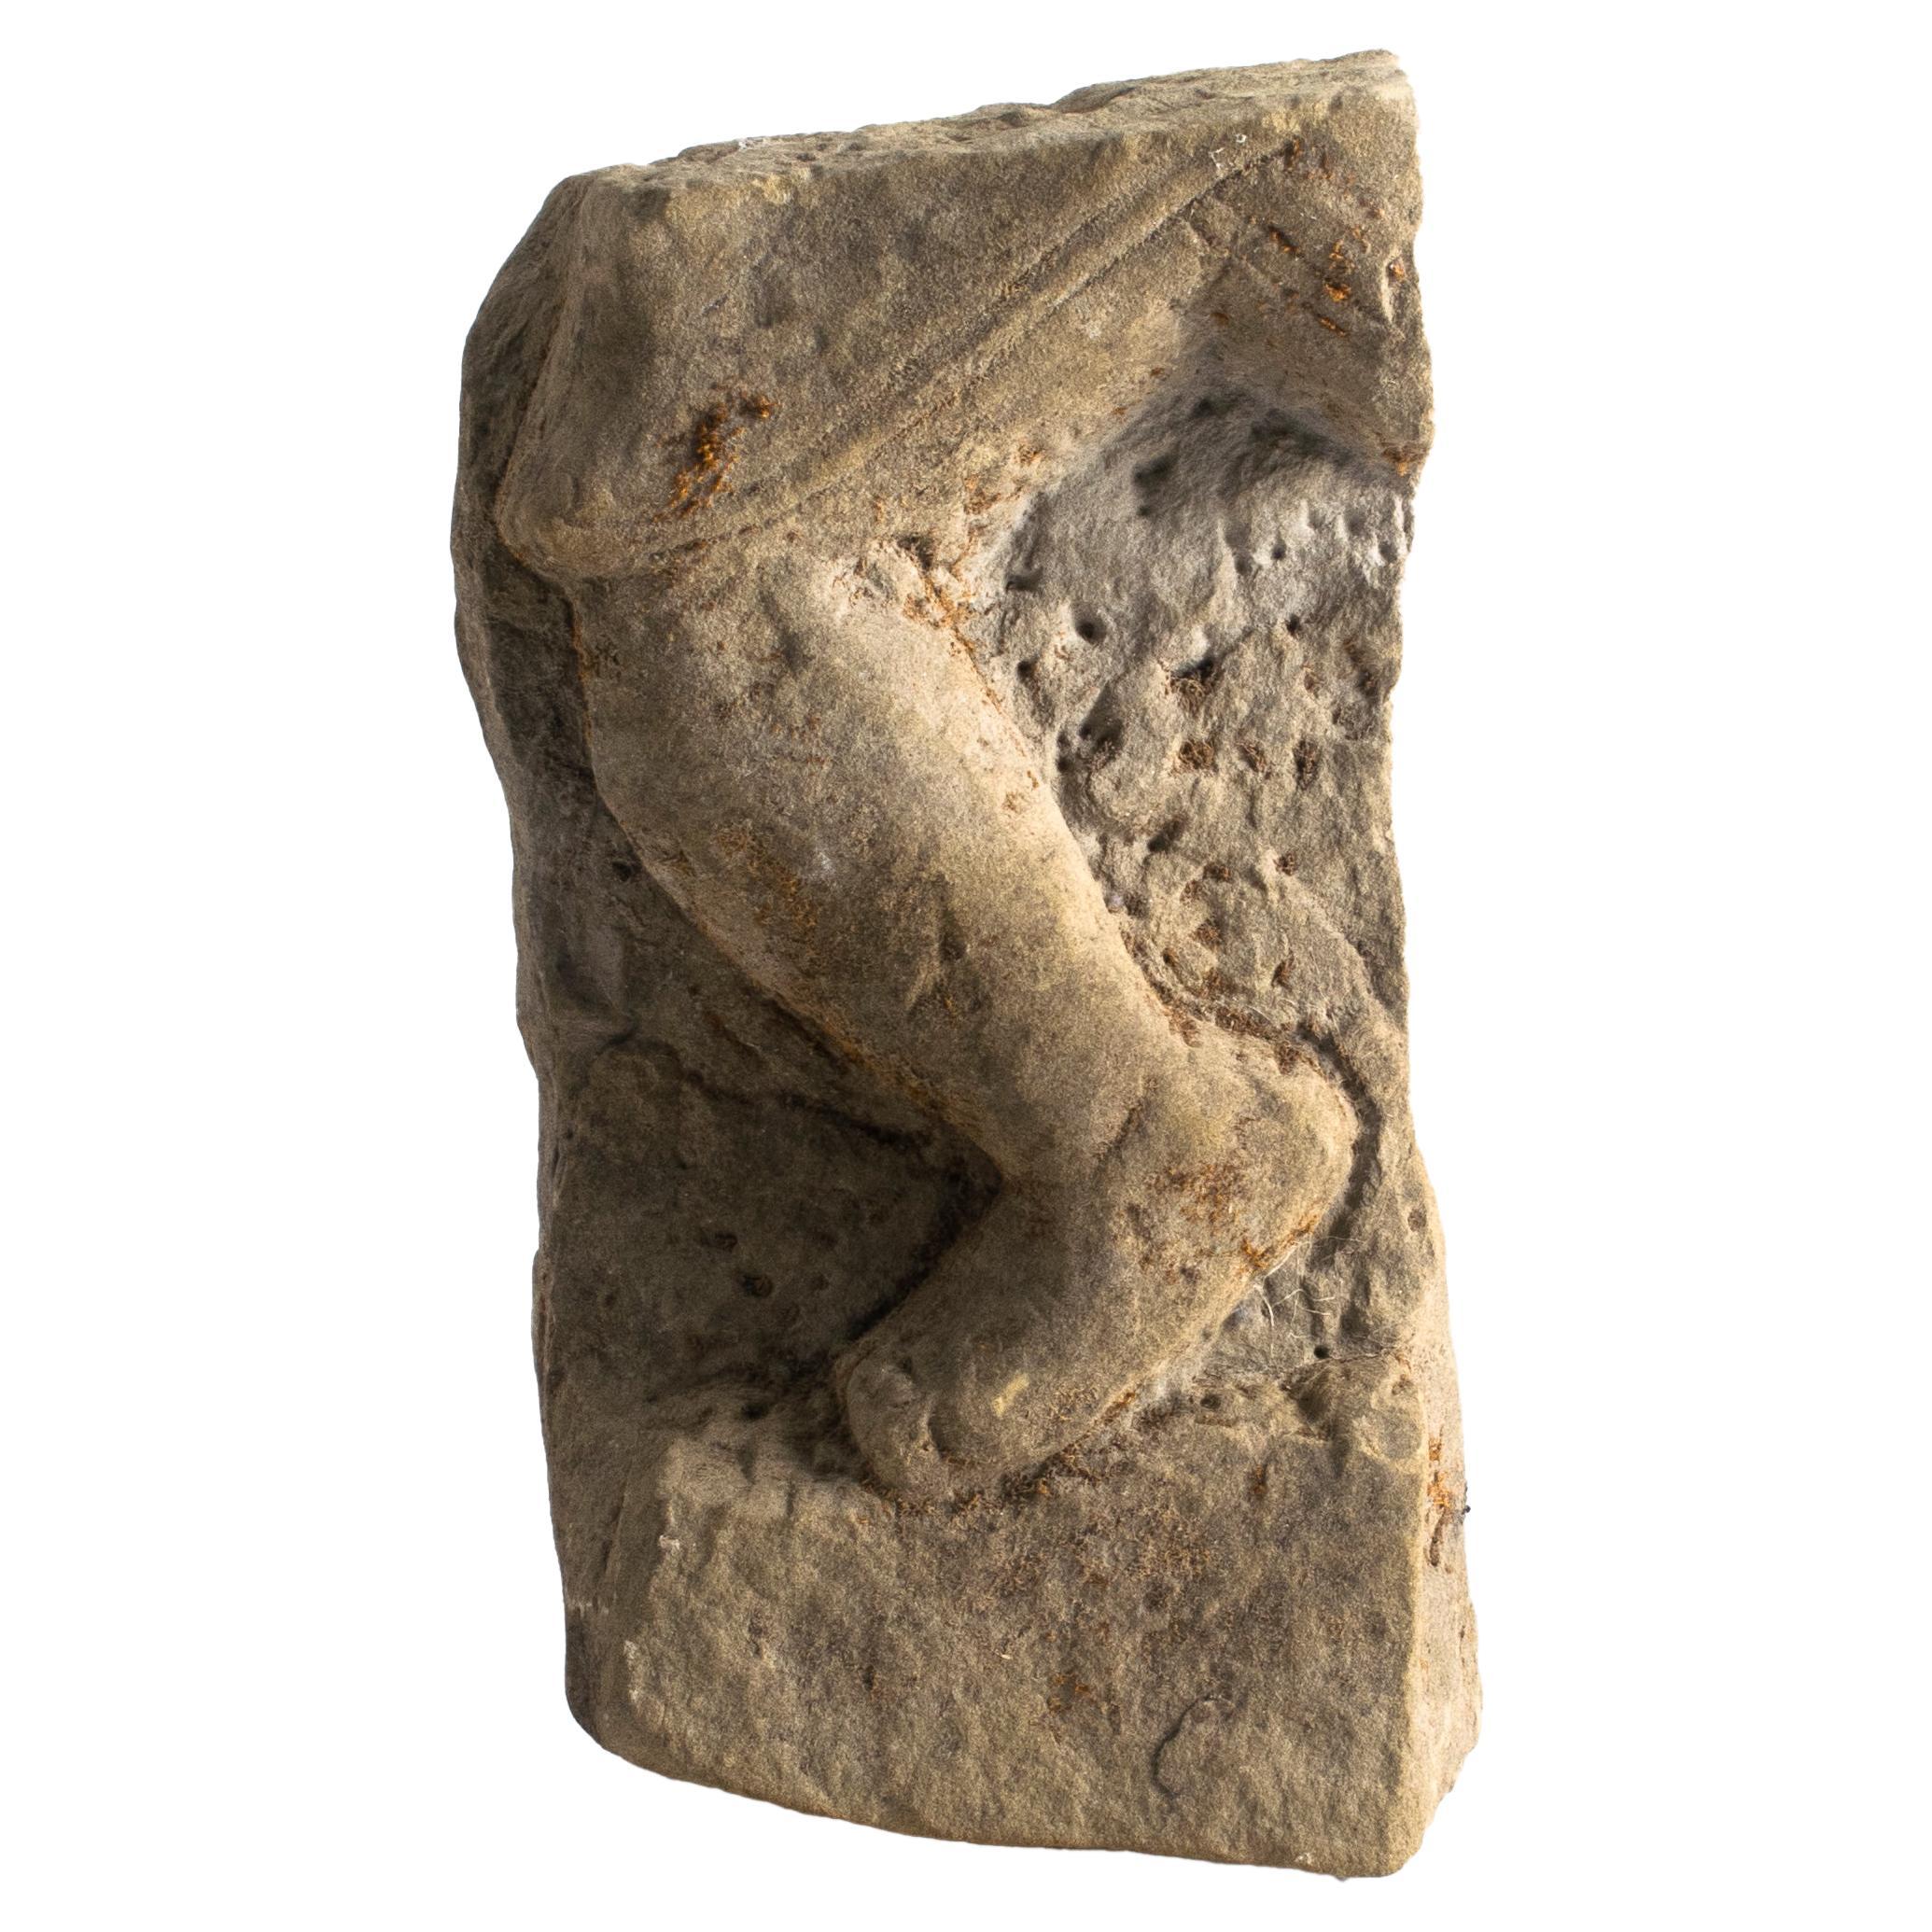 400-600 Years Old Sandstone Sculpture Leg Fragment